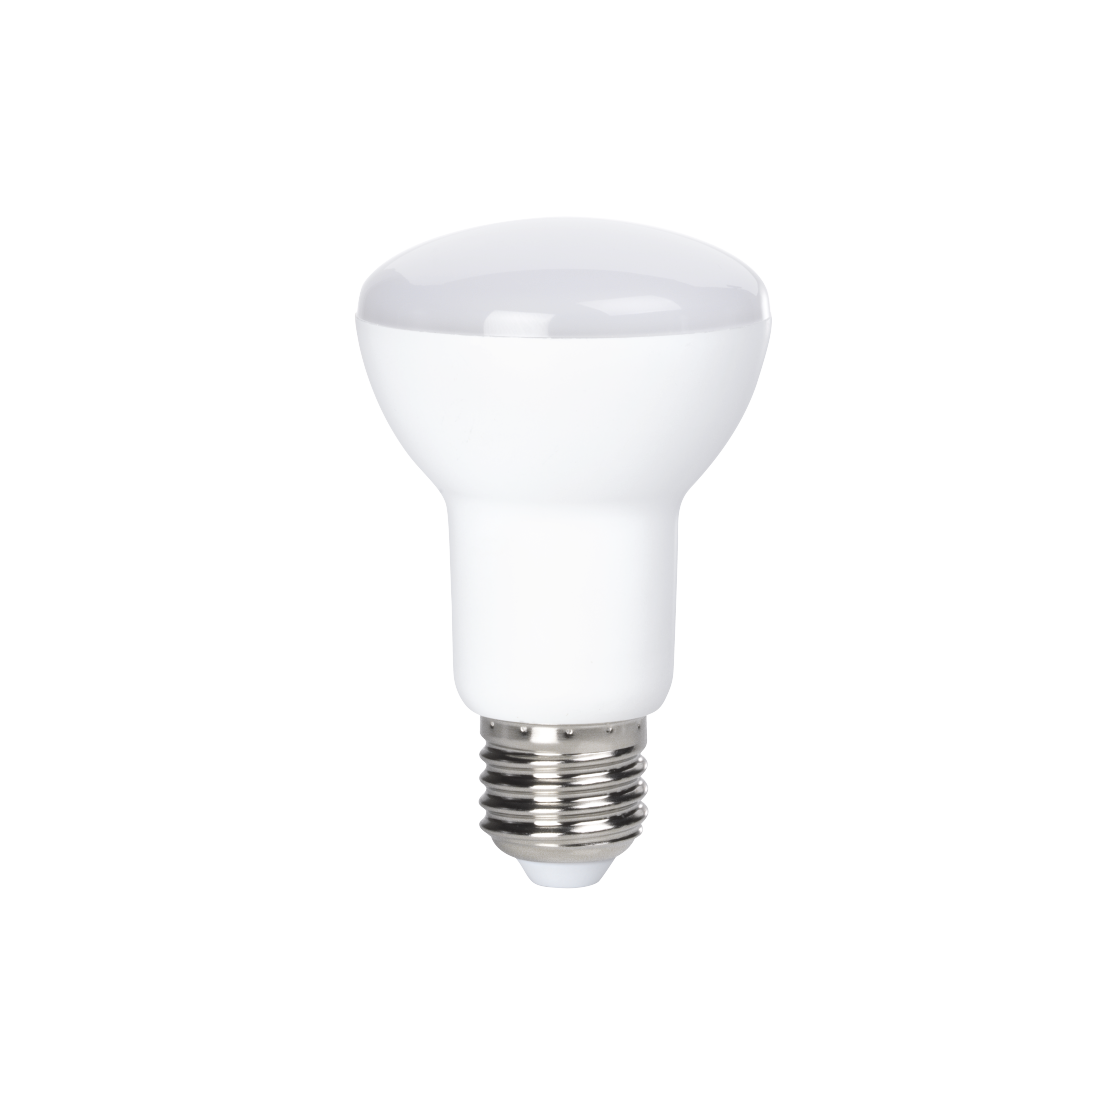 abx Druckfähige Abbildung - Xavax, LED-Lampe, E27, 630lm ersetzt 60W, Reflektorlampe R63, Warmweiß